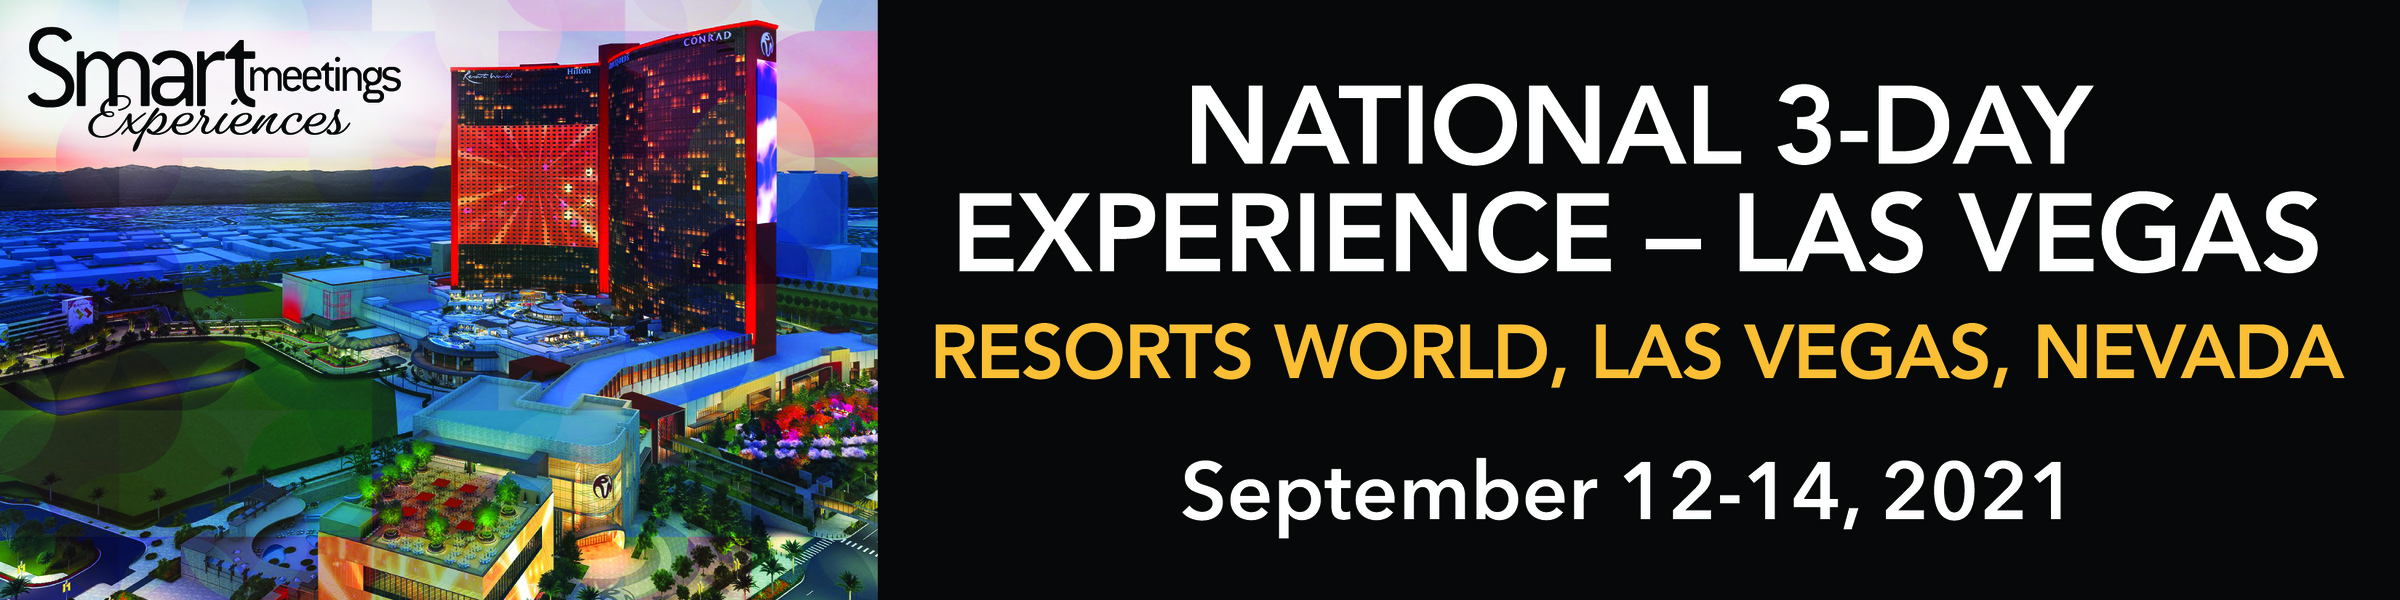 Smart Meetings National 3-Day Experience -Las Vegas